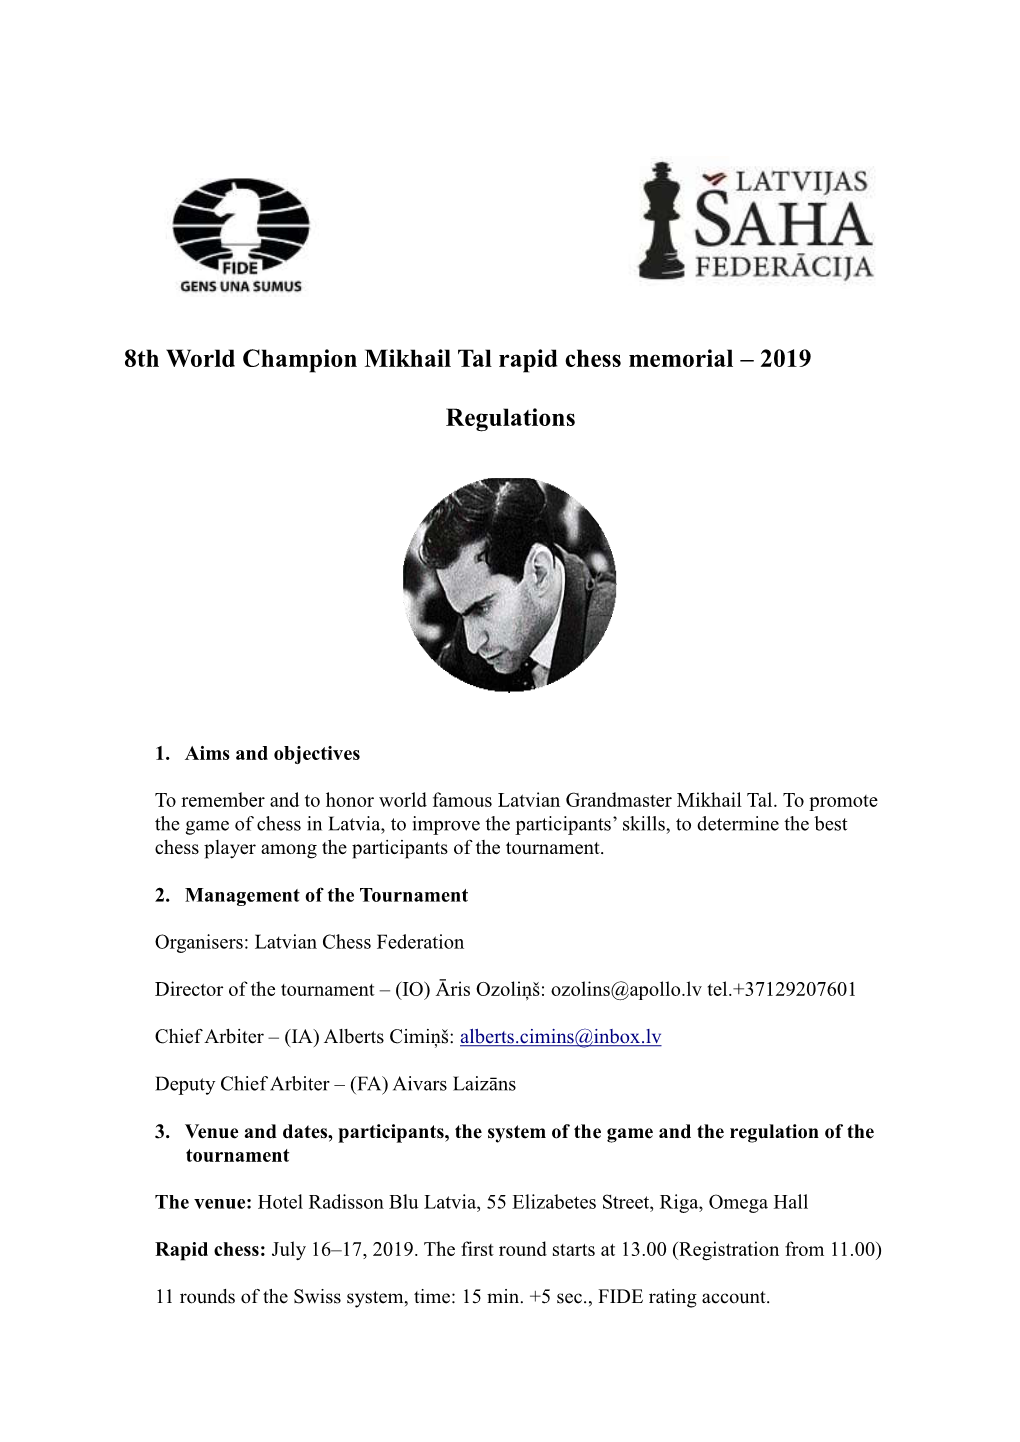 8Th World Champion Mikhail Tal Rapid Chess Memorial – 2019 Regulations